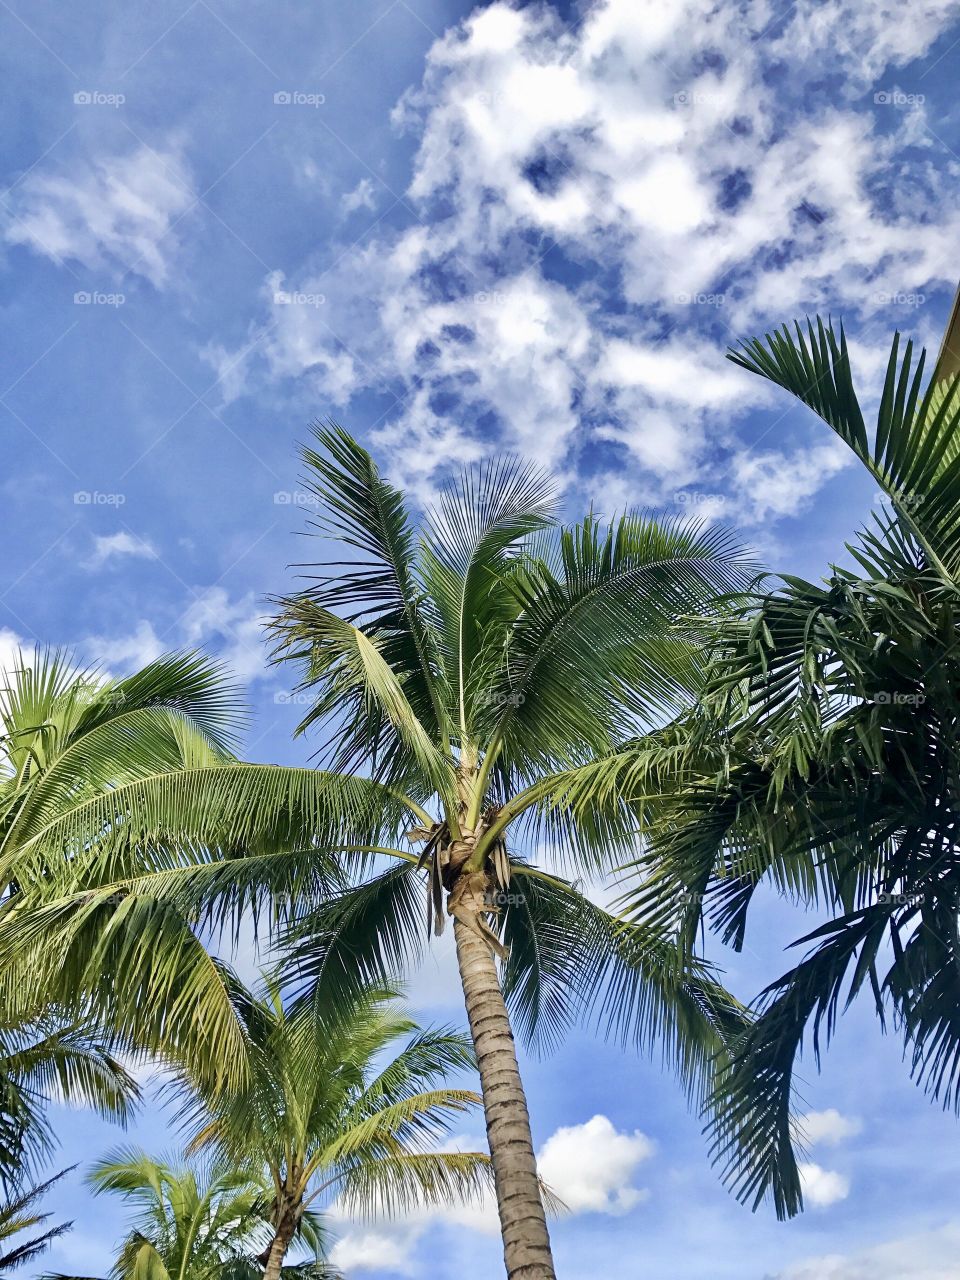 Palm trees with a blue sky 